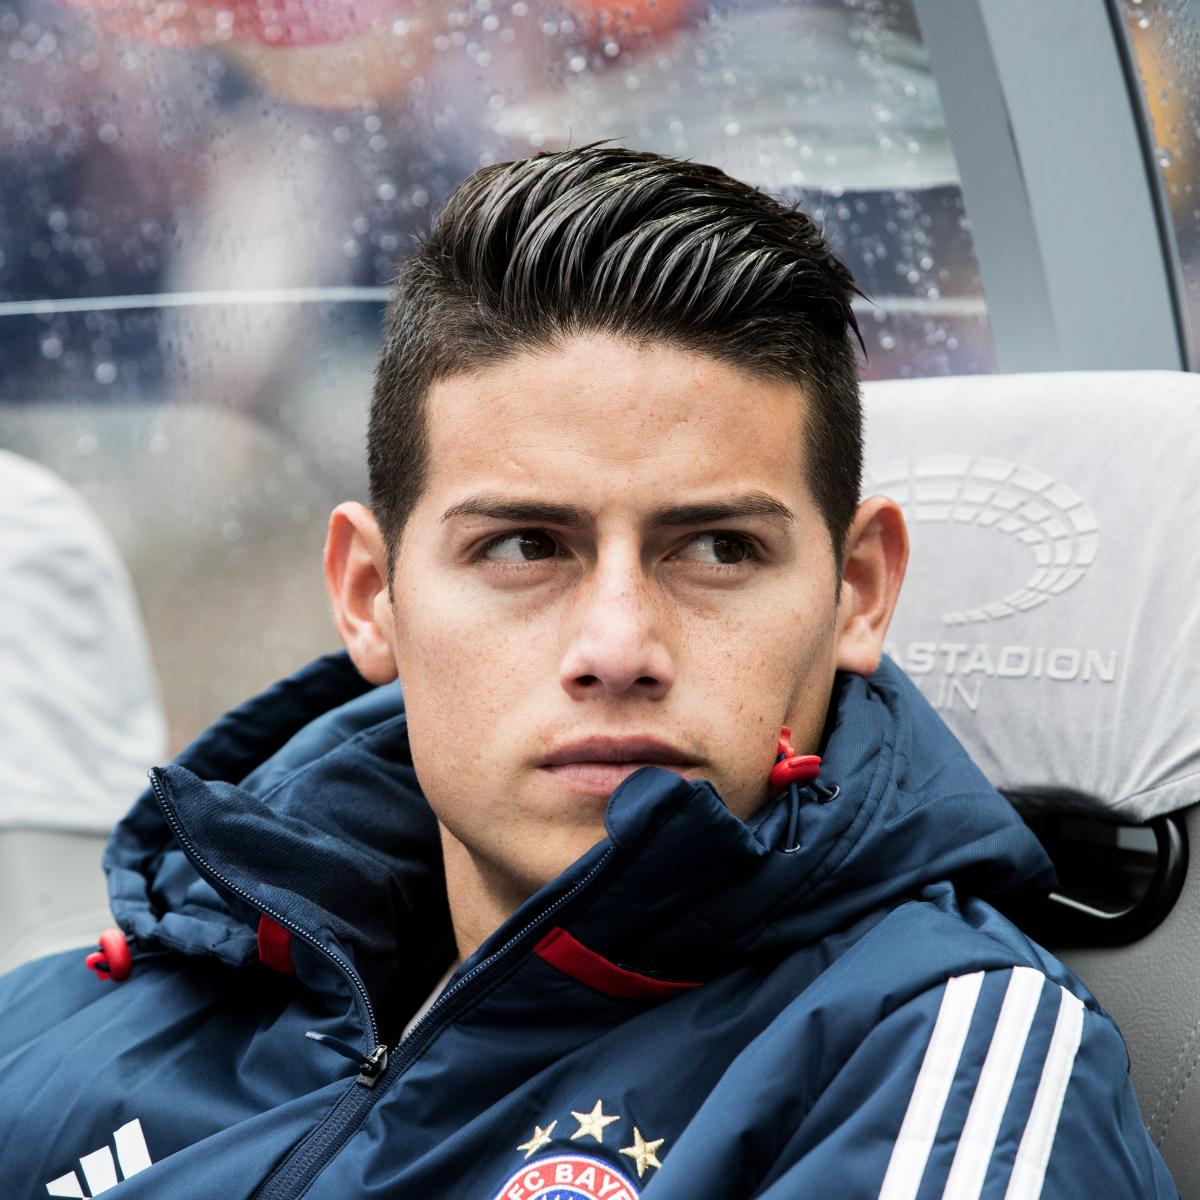 James Rodriguez Bayern Munich Future in Doubt Amid Talk of 